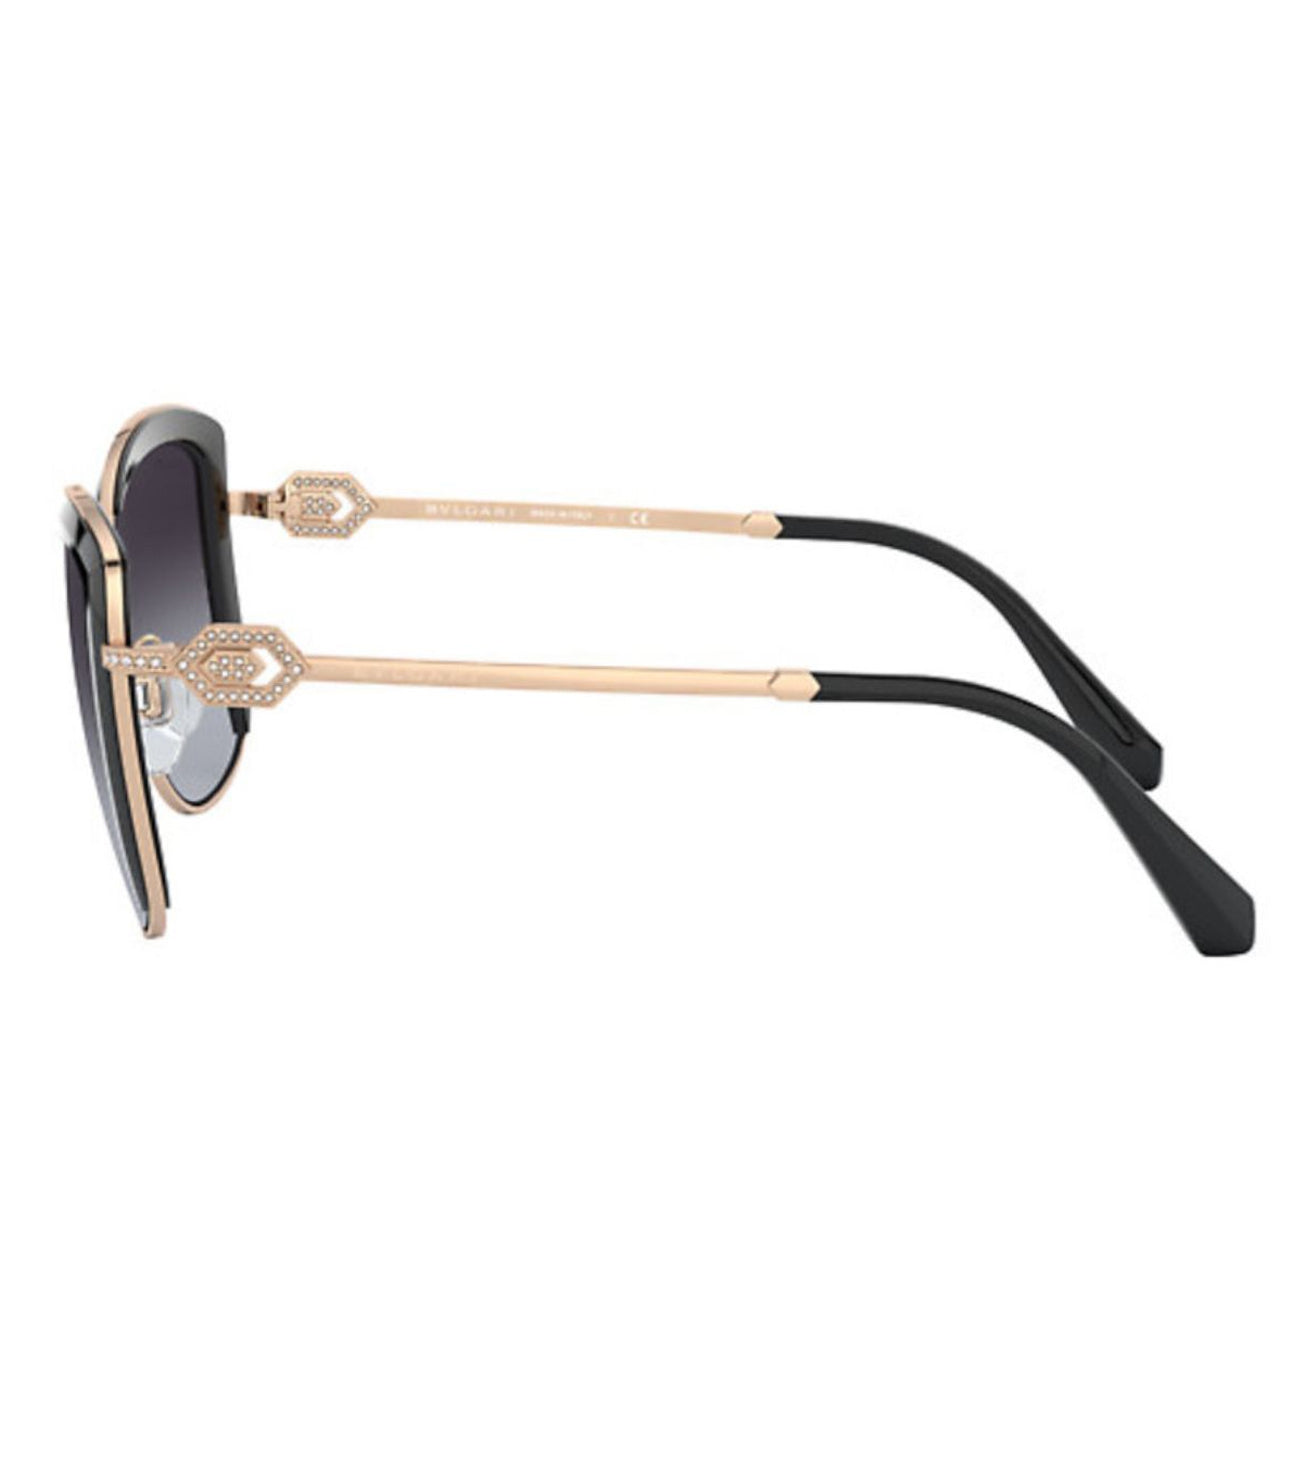 Voyage Exclusive Grey & Navy Blue Polarized Wayfarer Sunglasses for Me